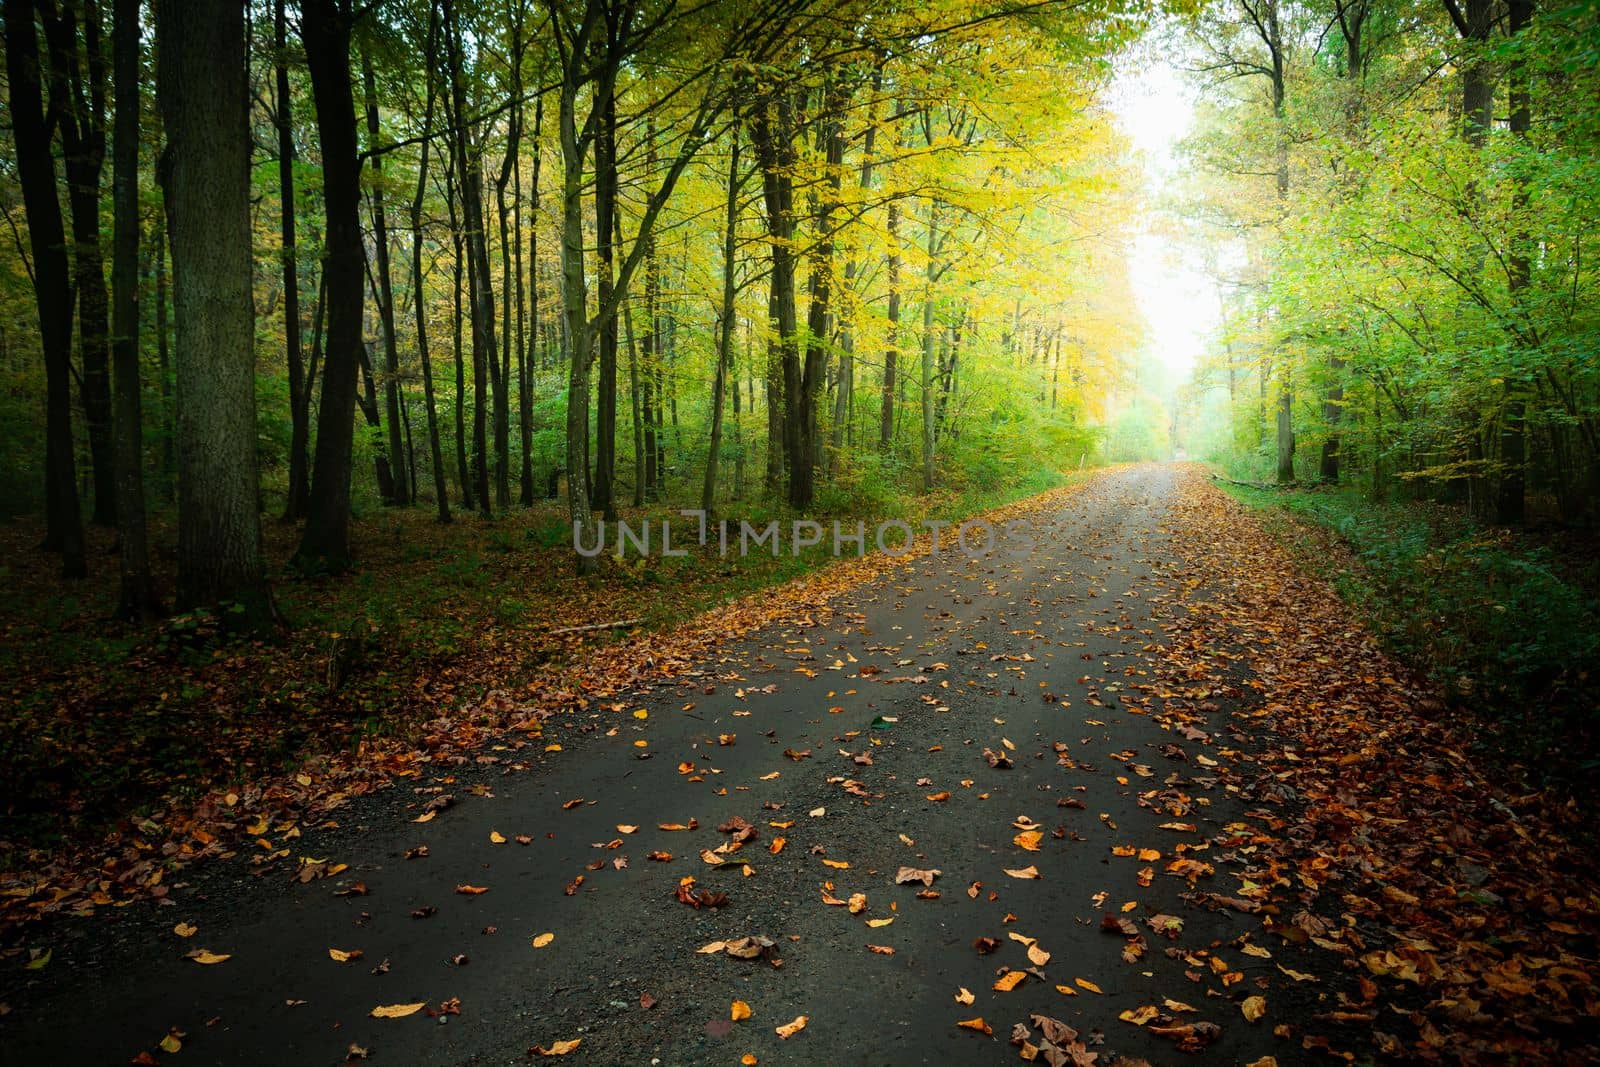 Fallen leaves on the road in the woods by darekb22